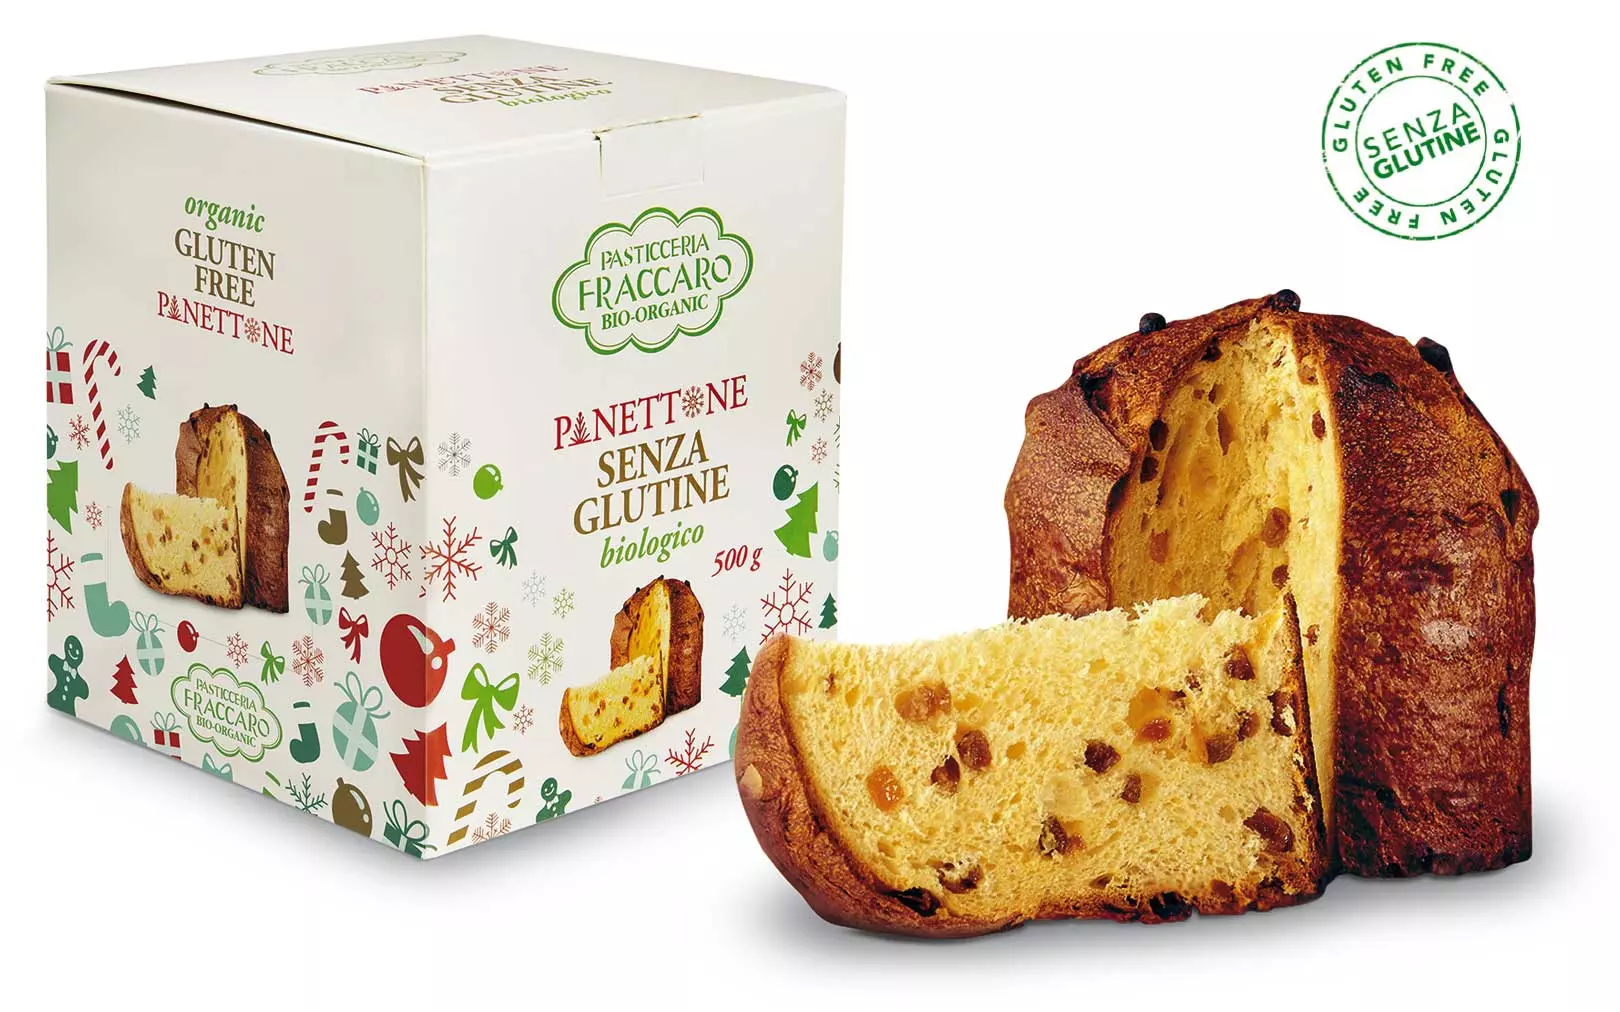 Panettone Sans Gluten 500 g Pasticceria Fraccaro Bio